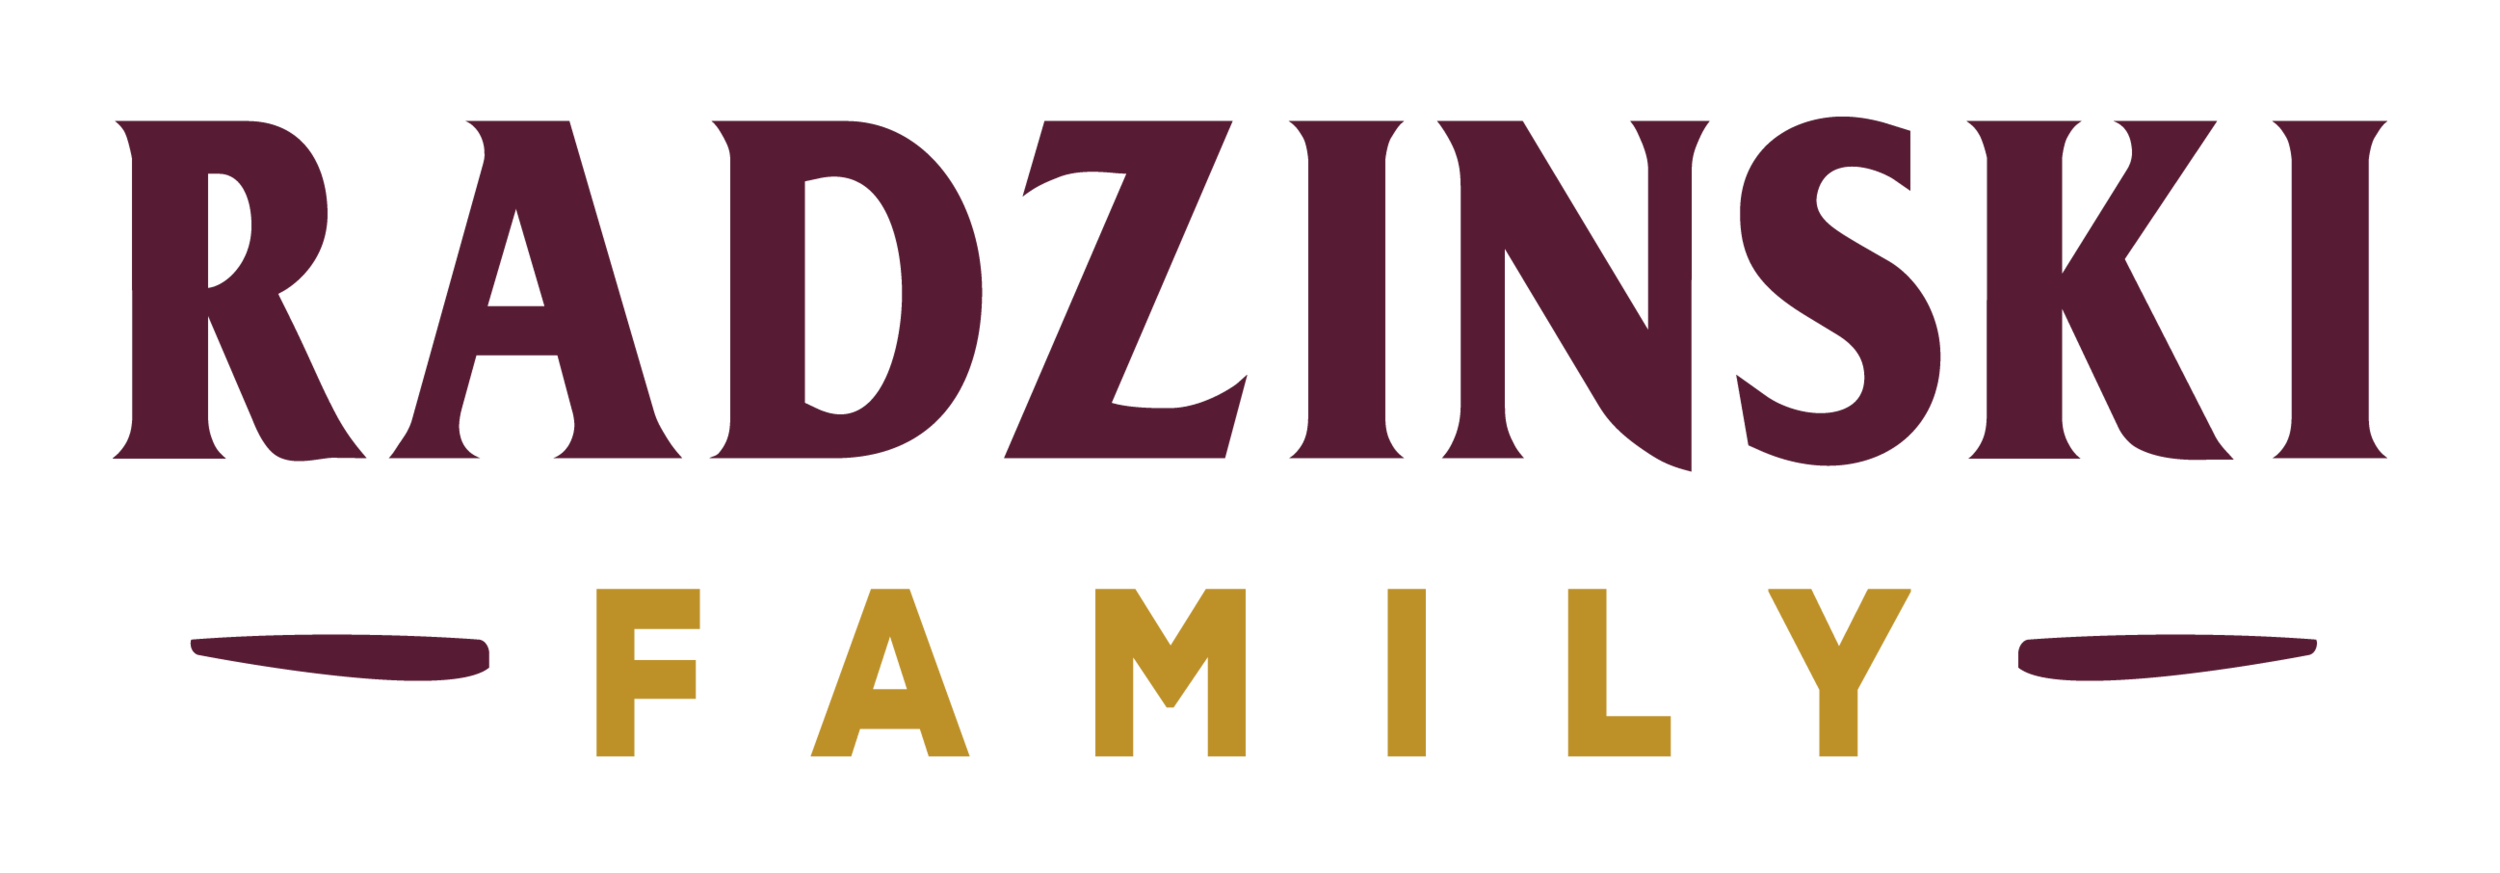 RadzinskiFamily_Logo-FullColor.png